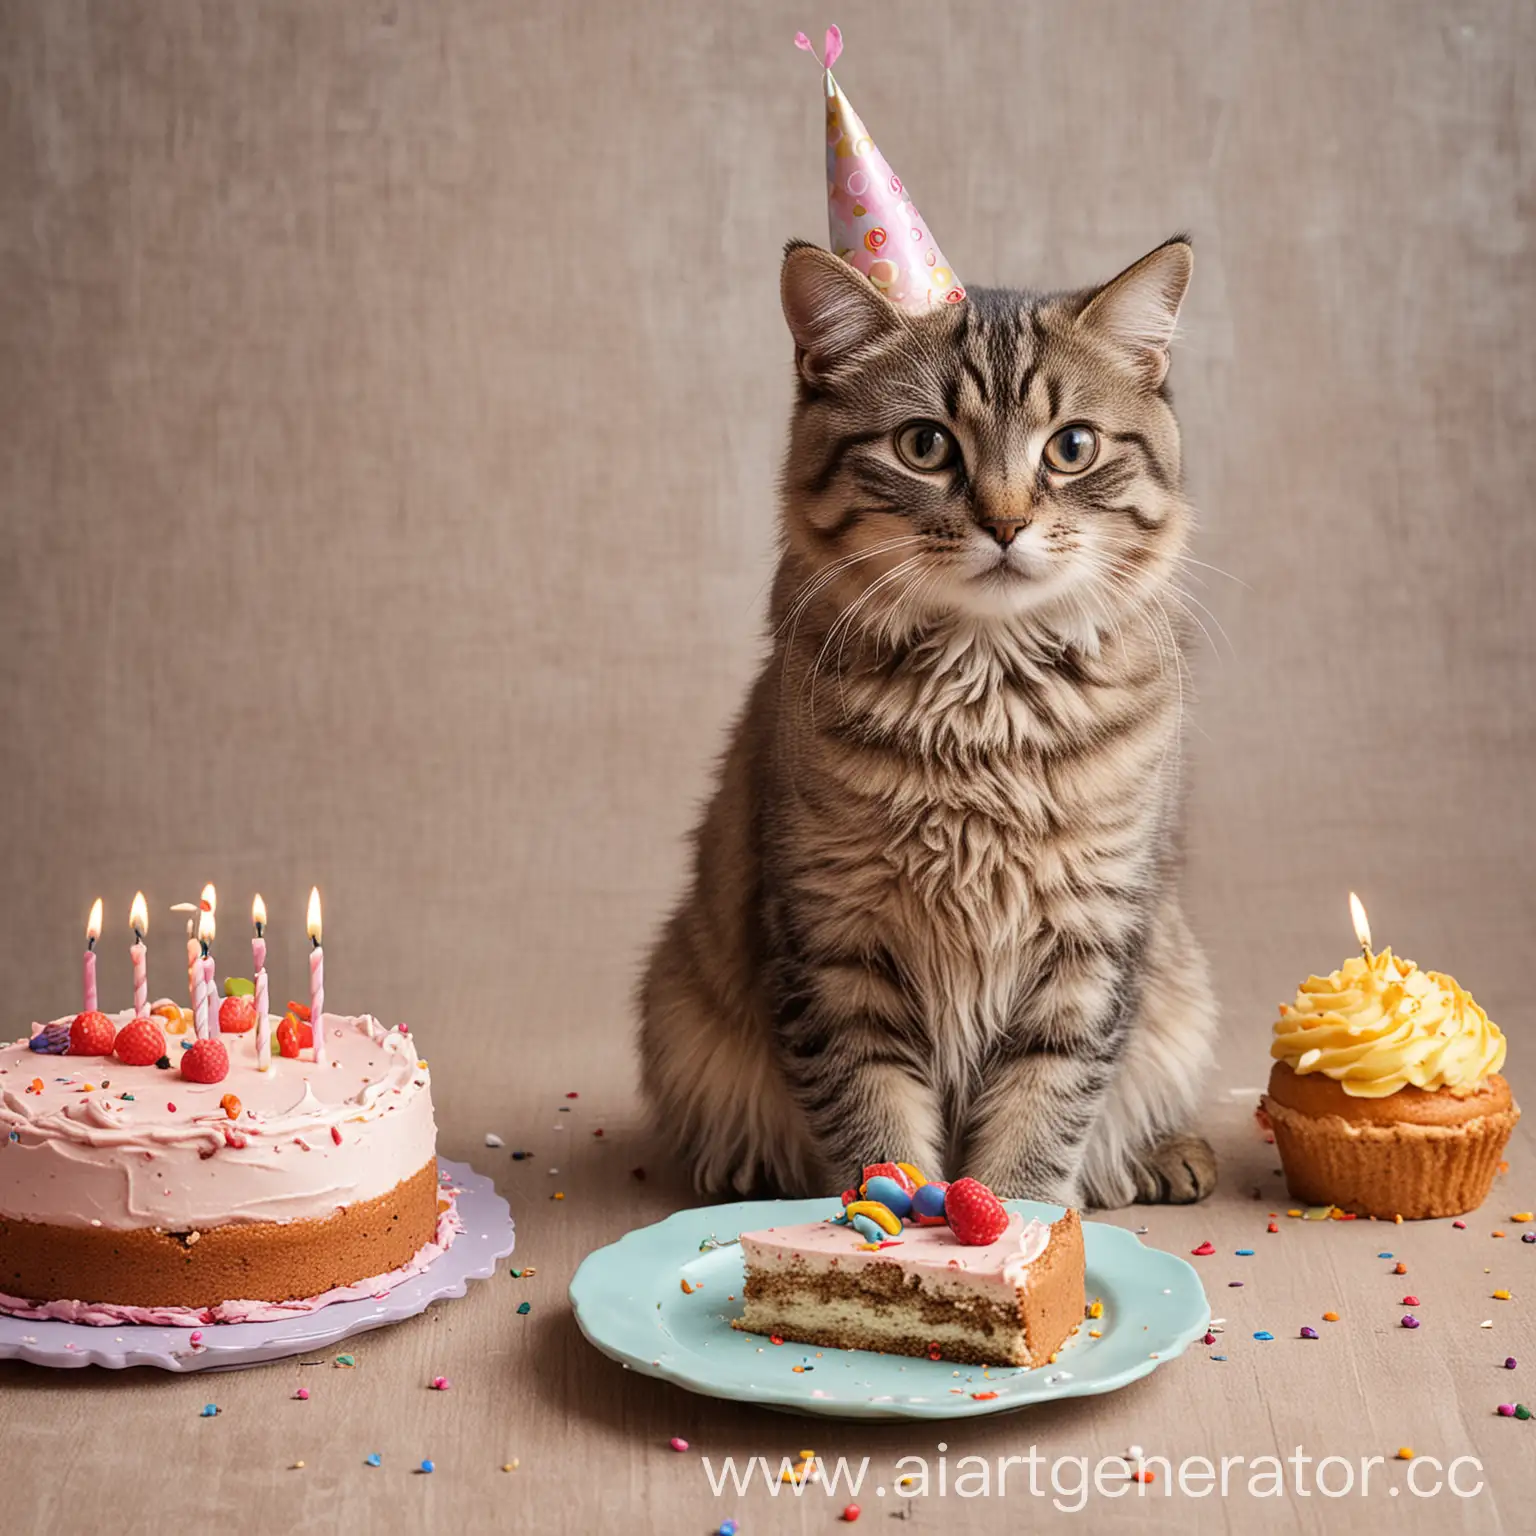 Adorable-Cat-Celebrating-Birthday-with-Cake